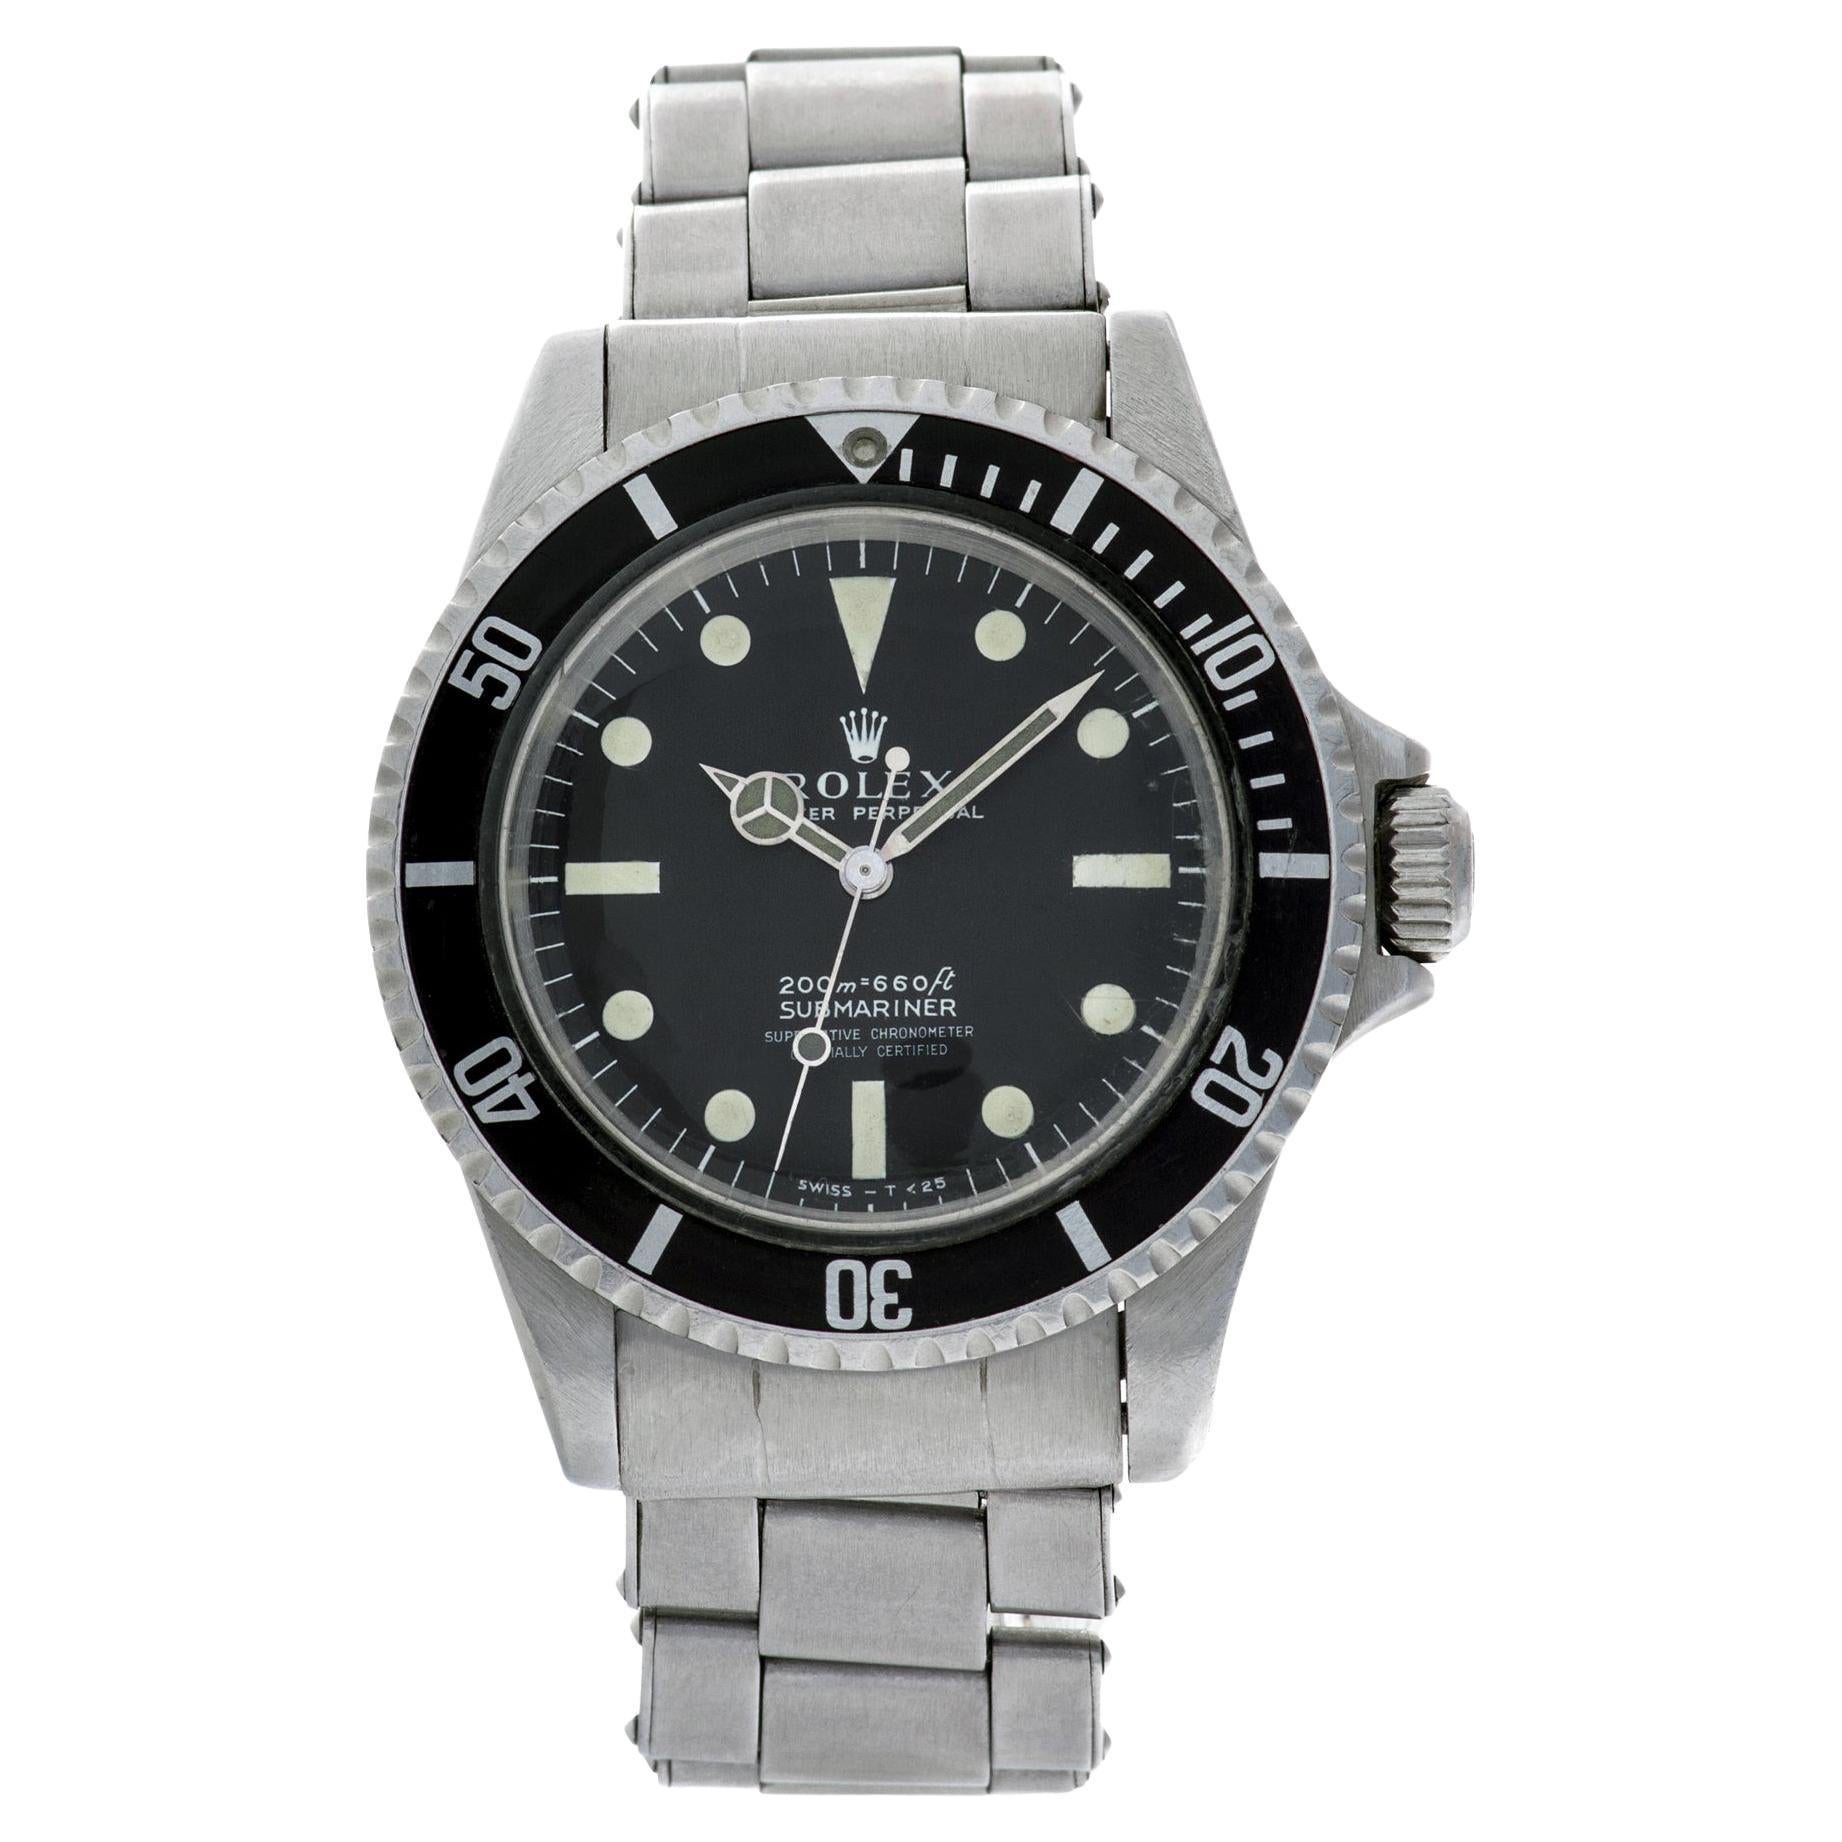 Rolex Submariner Vintage "Mark I" with First Dial Wristwatch Ref. 5512